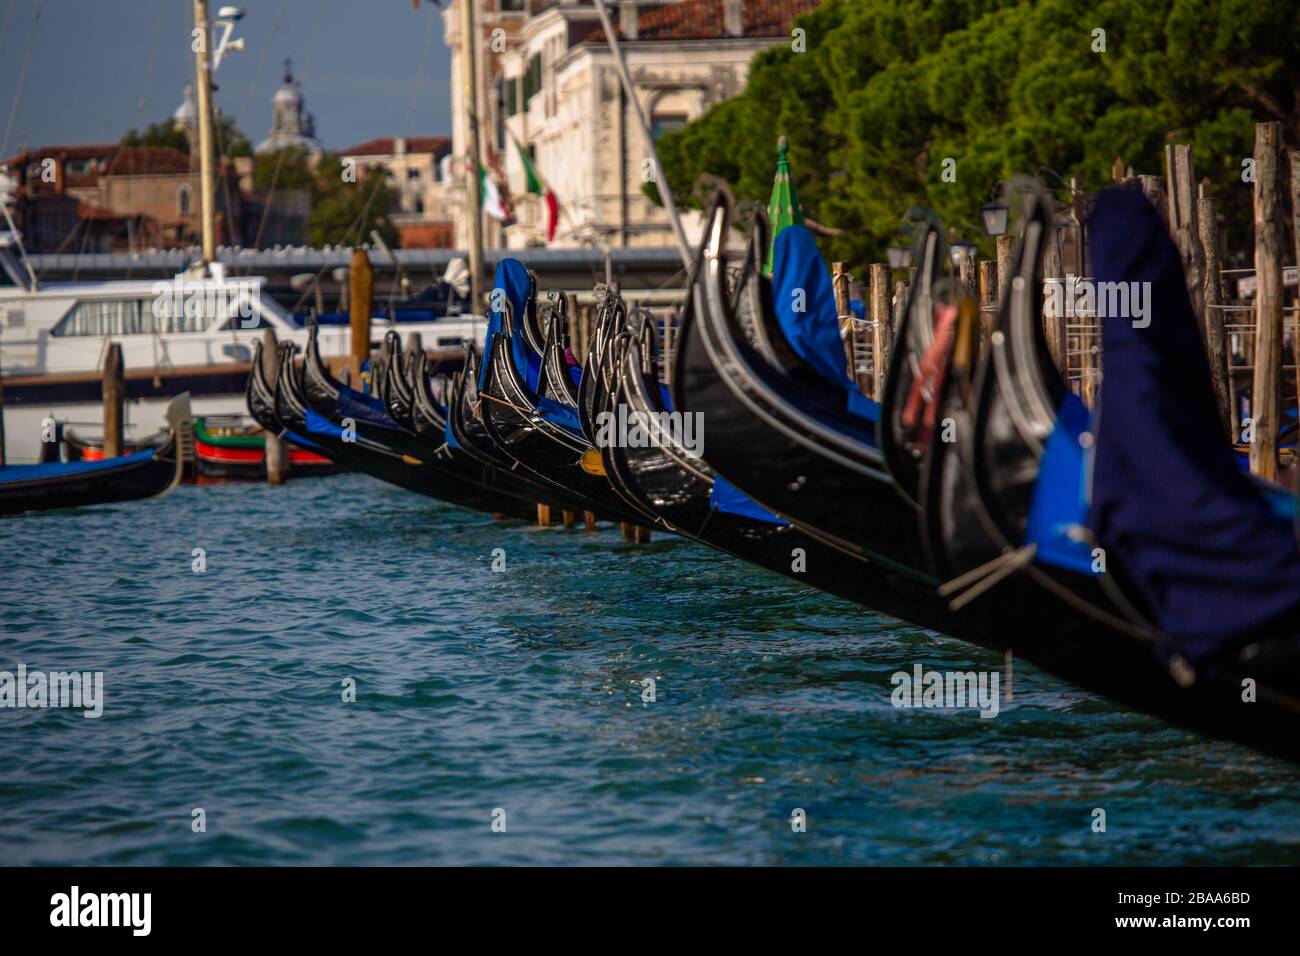 Hundreds of gondolas moored during Italy's quarantine period, Venice, Italy Stock Photo